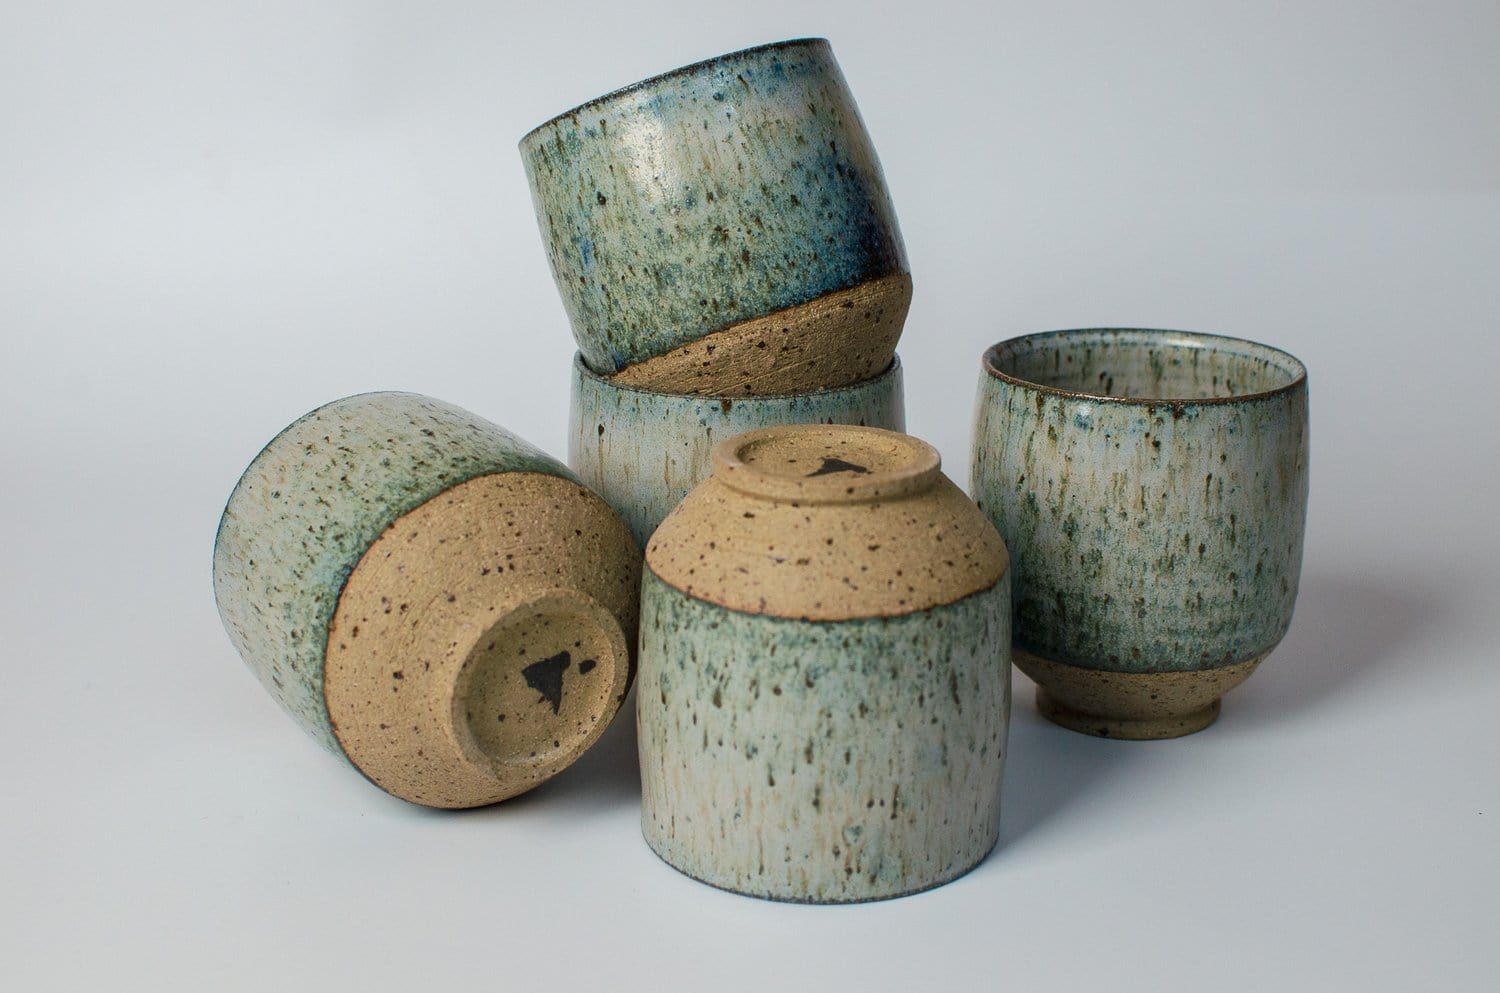 Nicholas Dover Ceramics Speckled Stoneware Cup with Blue/Green Glaze